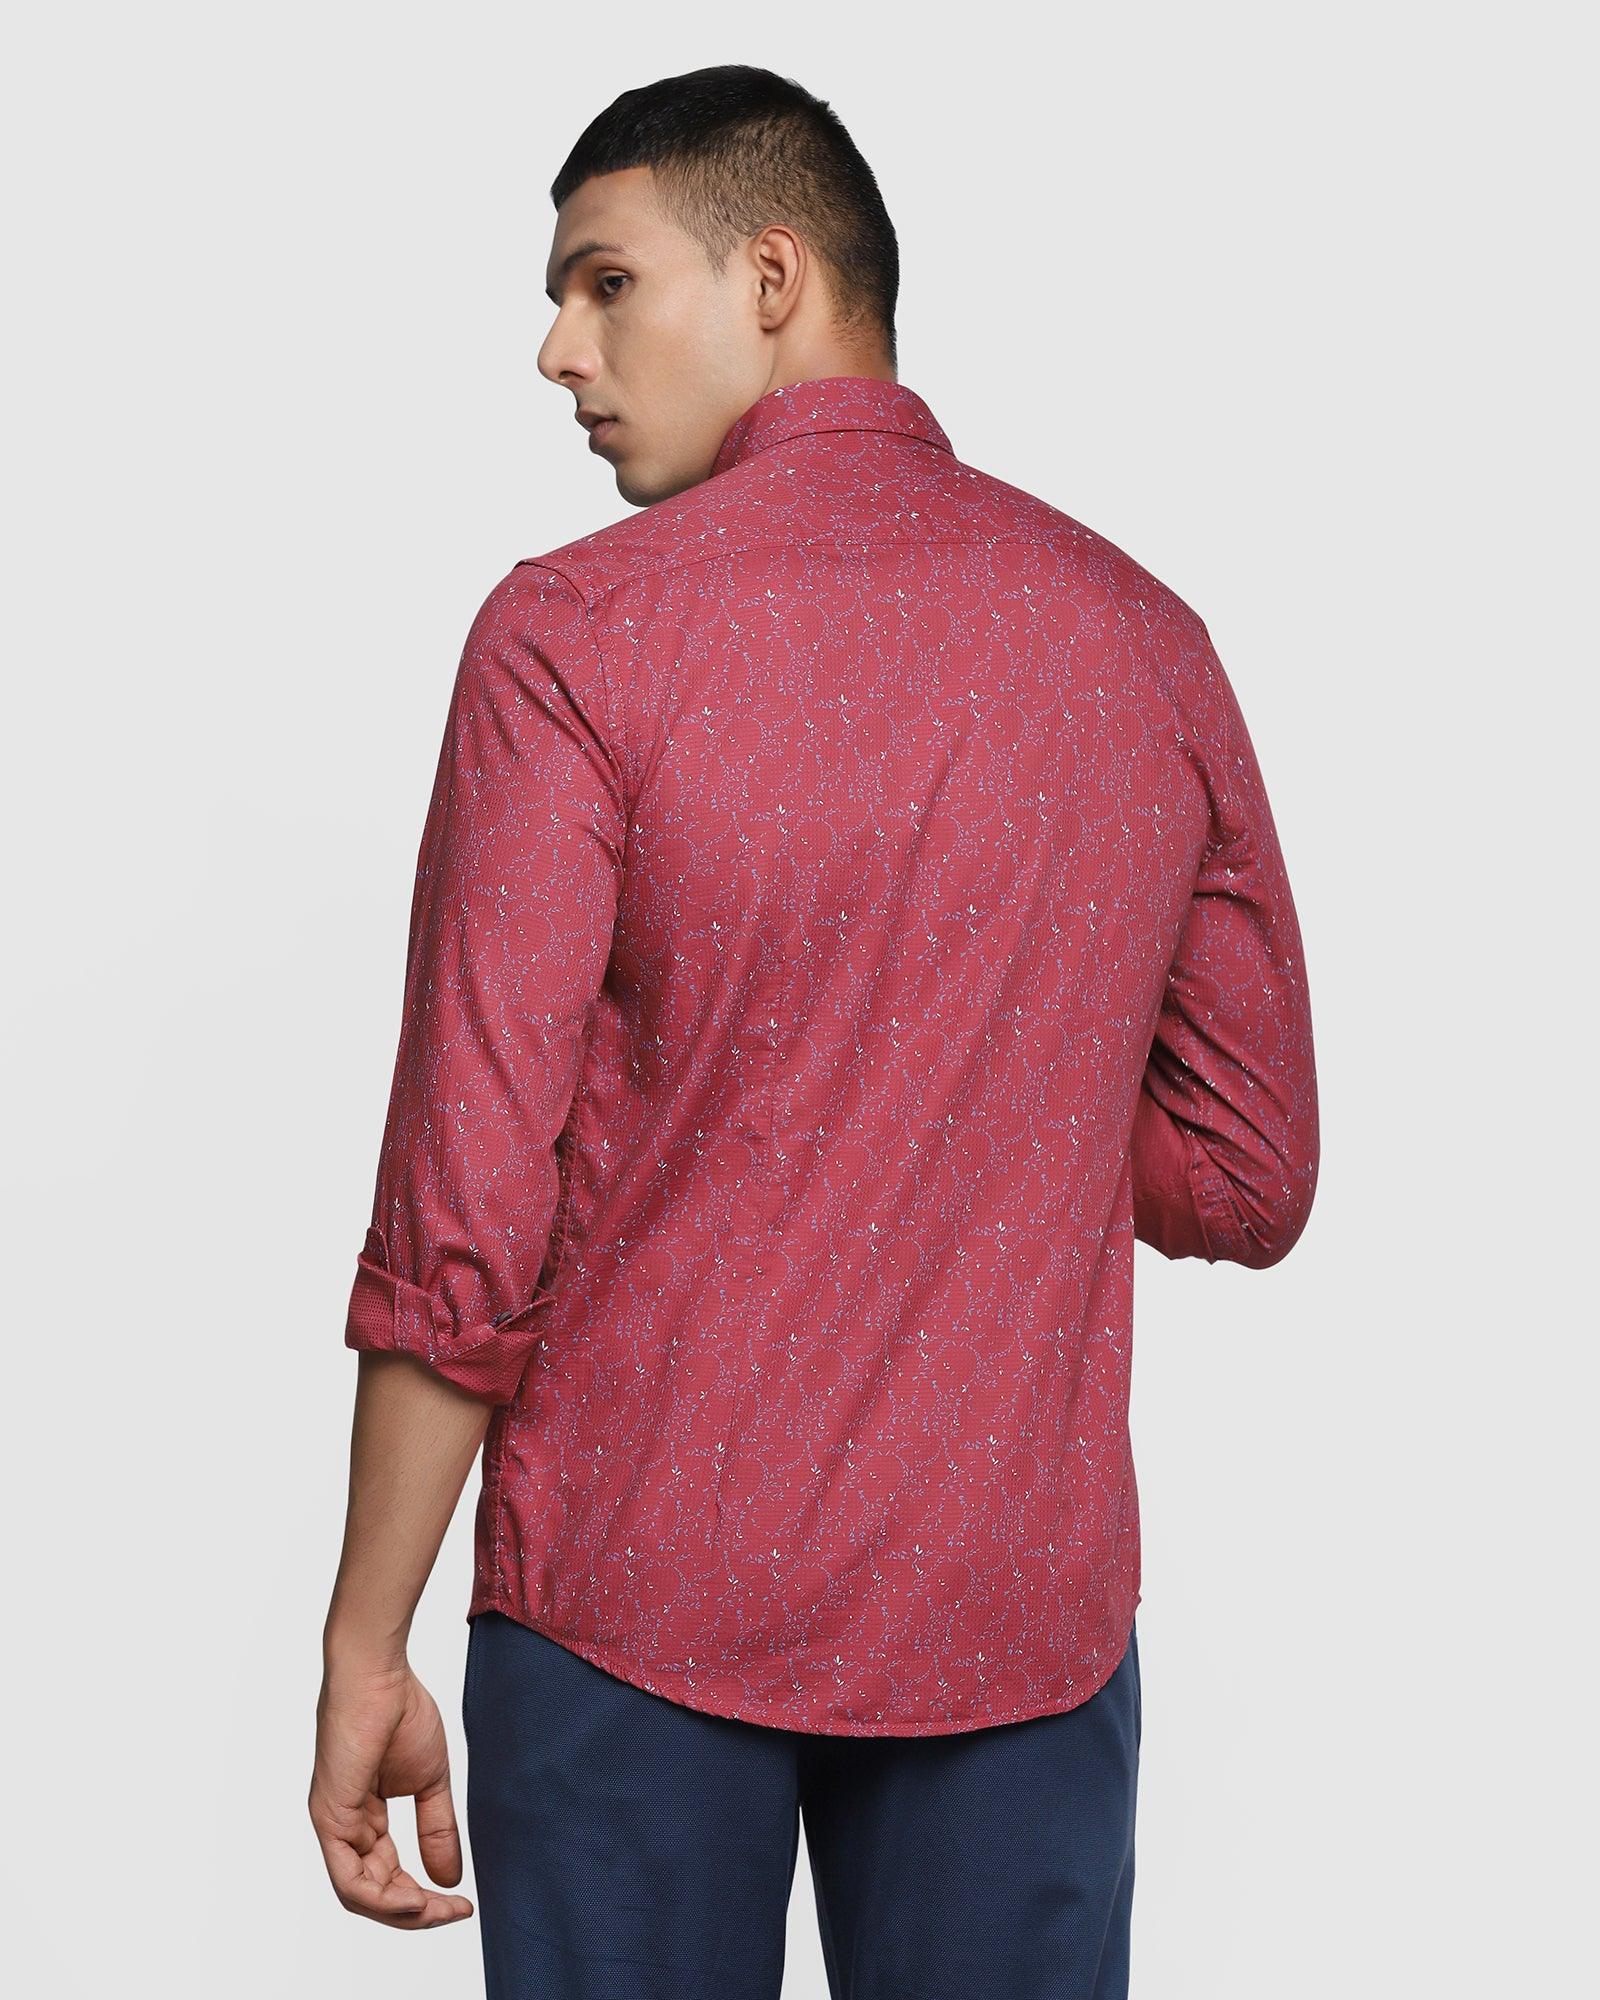 Casual Brick Red Printed Shirt - Mersin